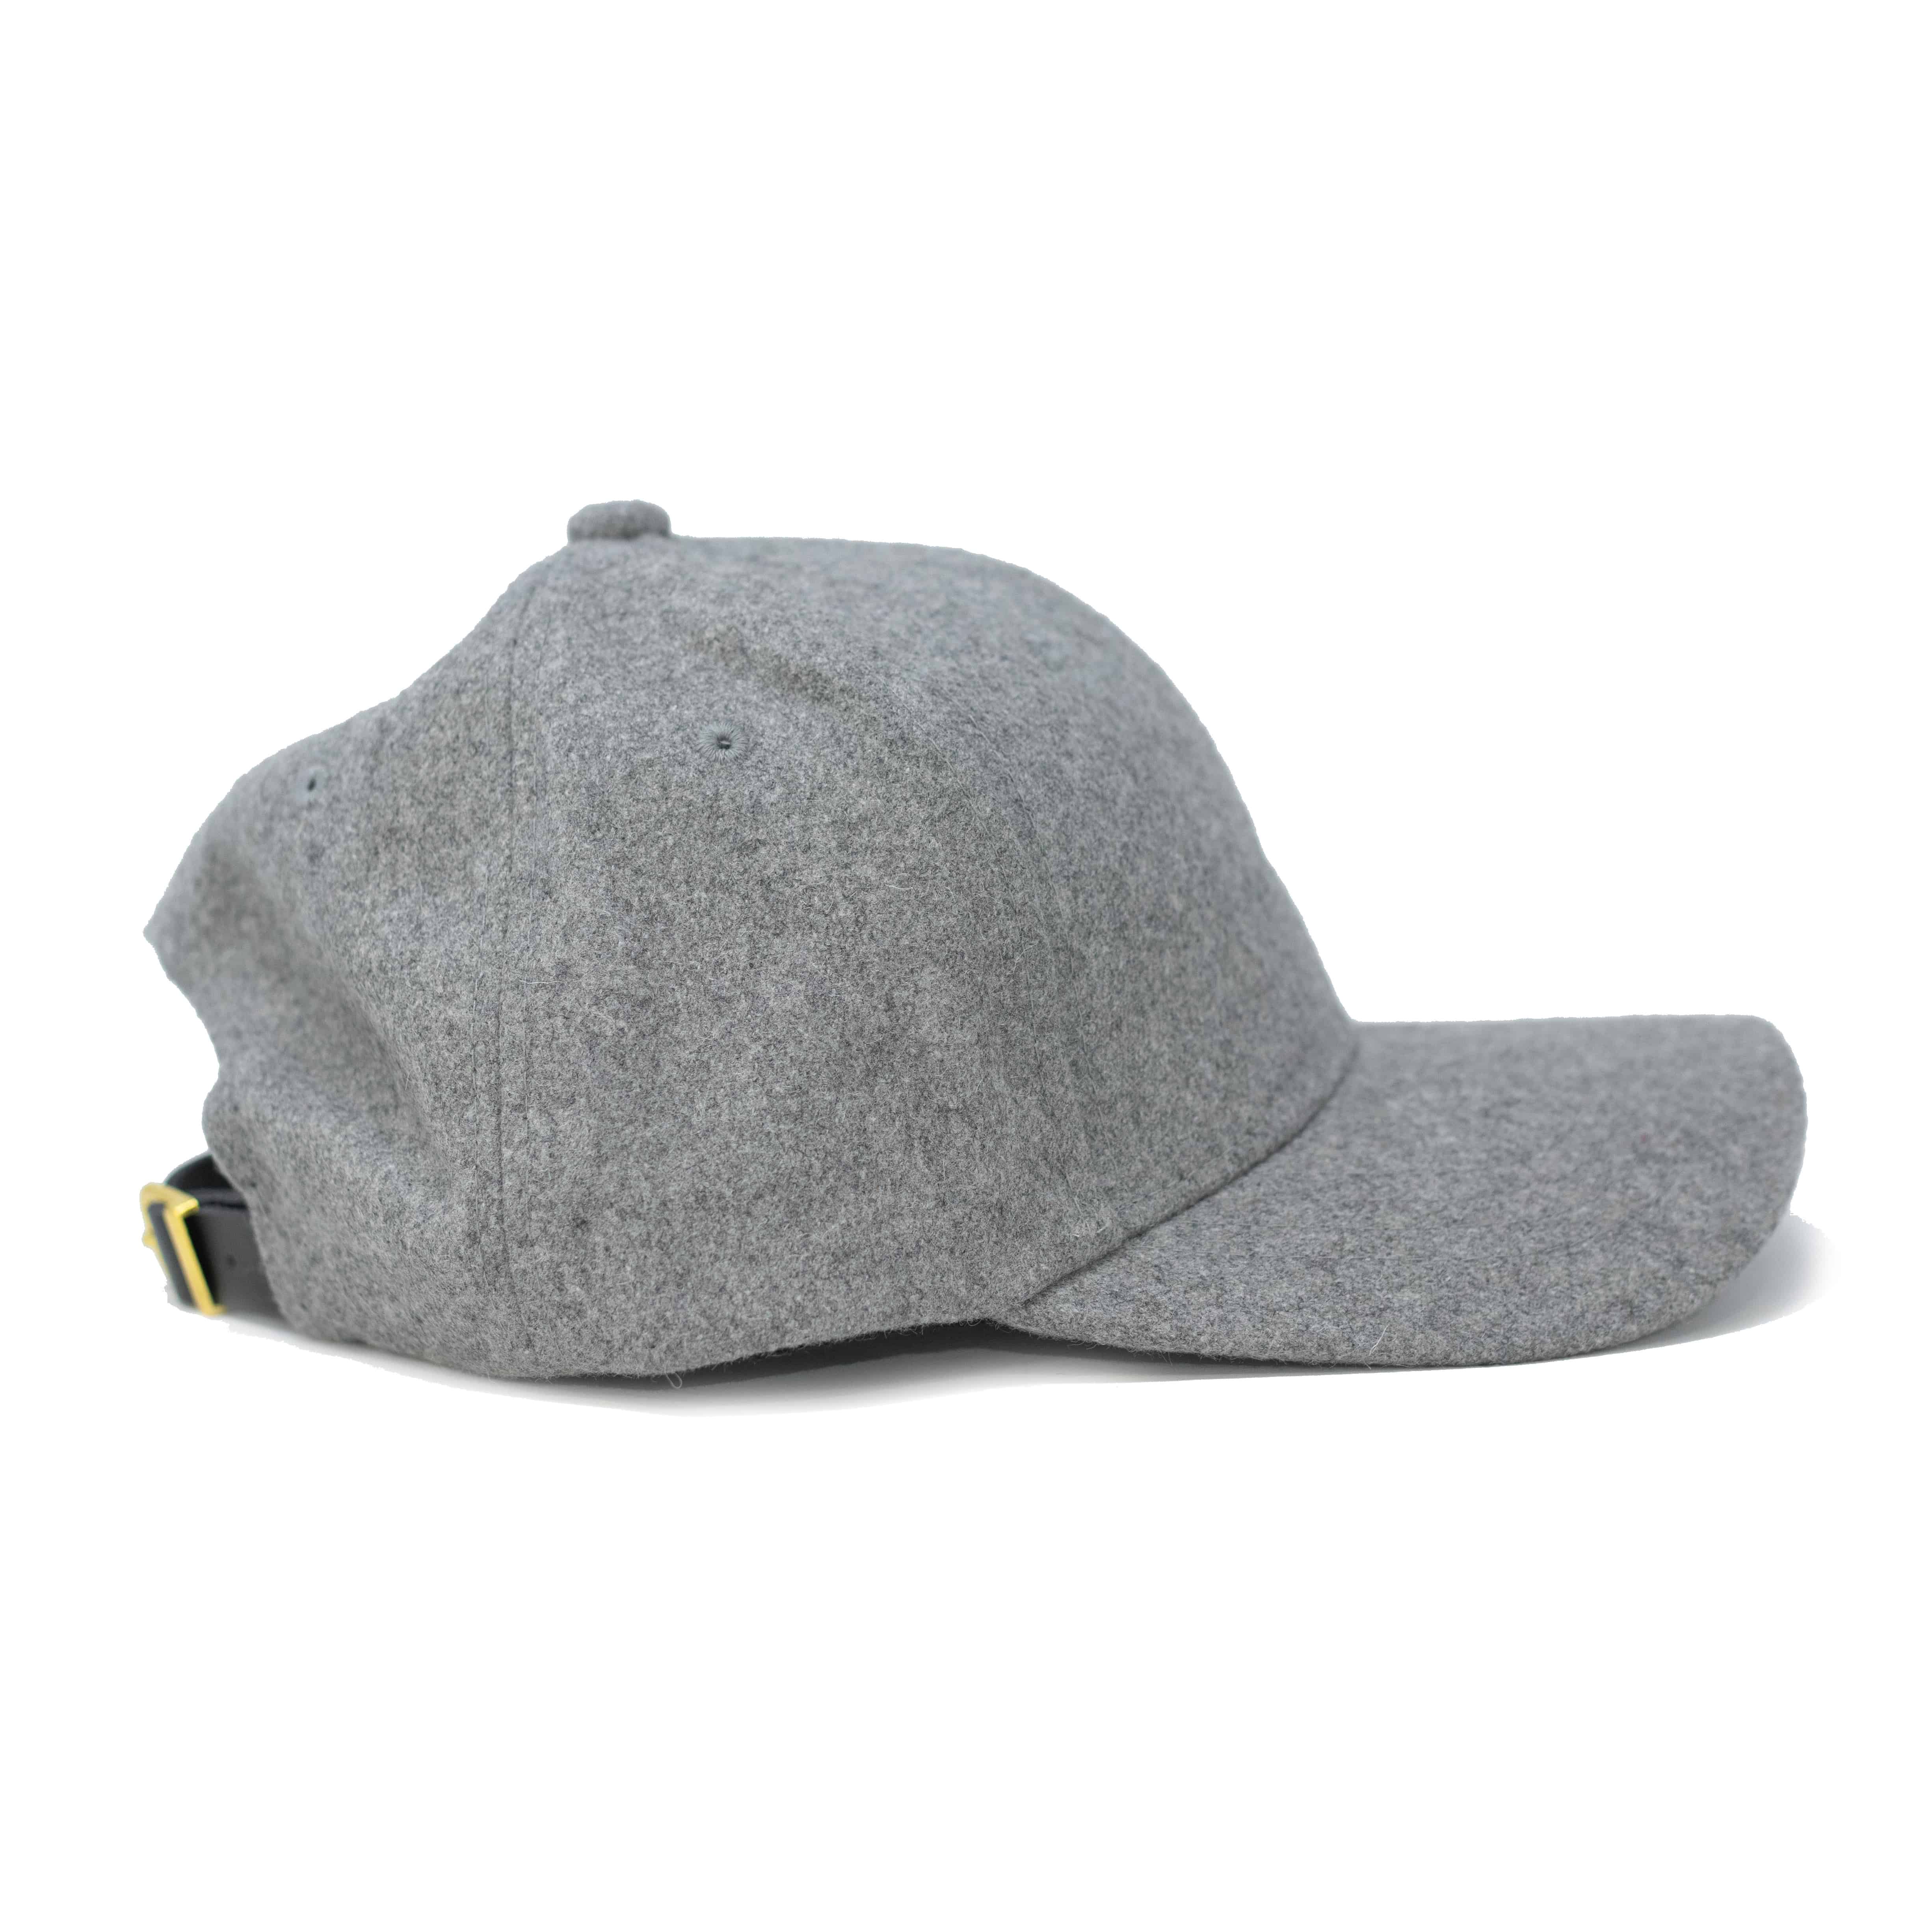 Grey wool hat - we run the town